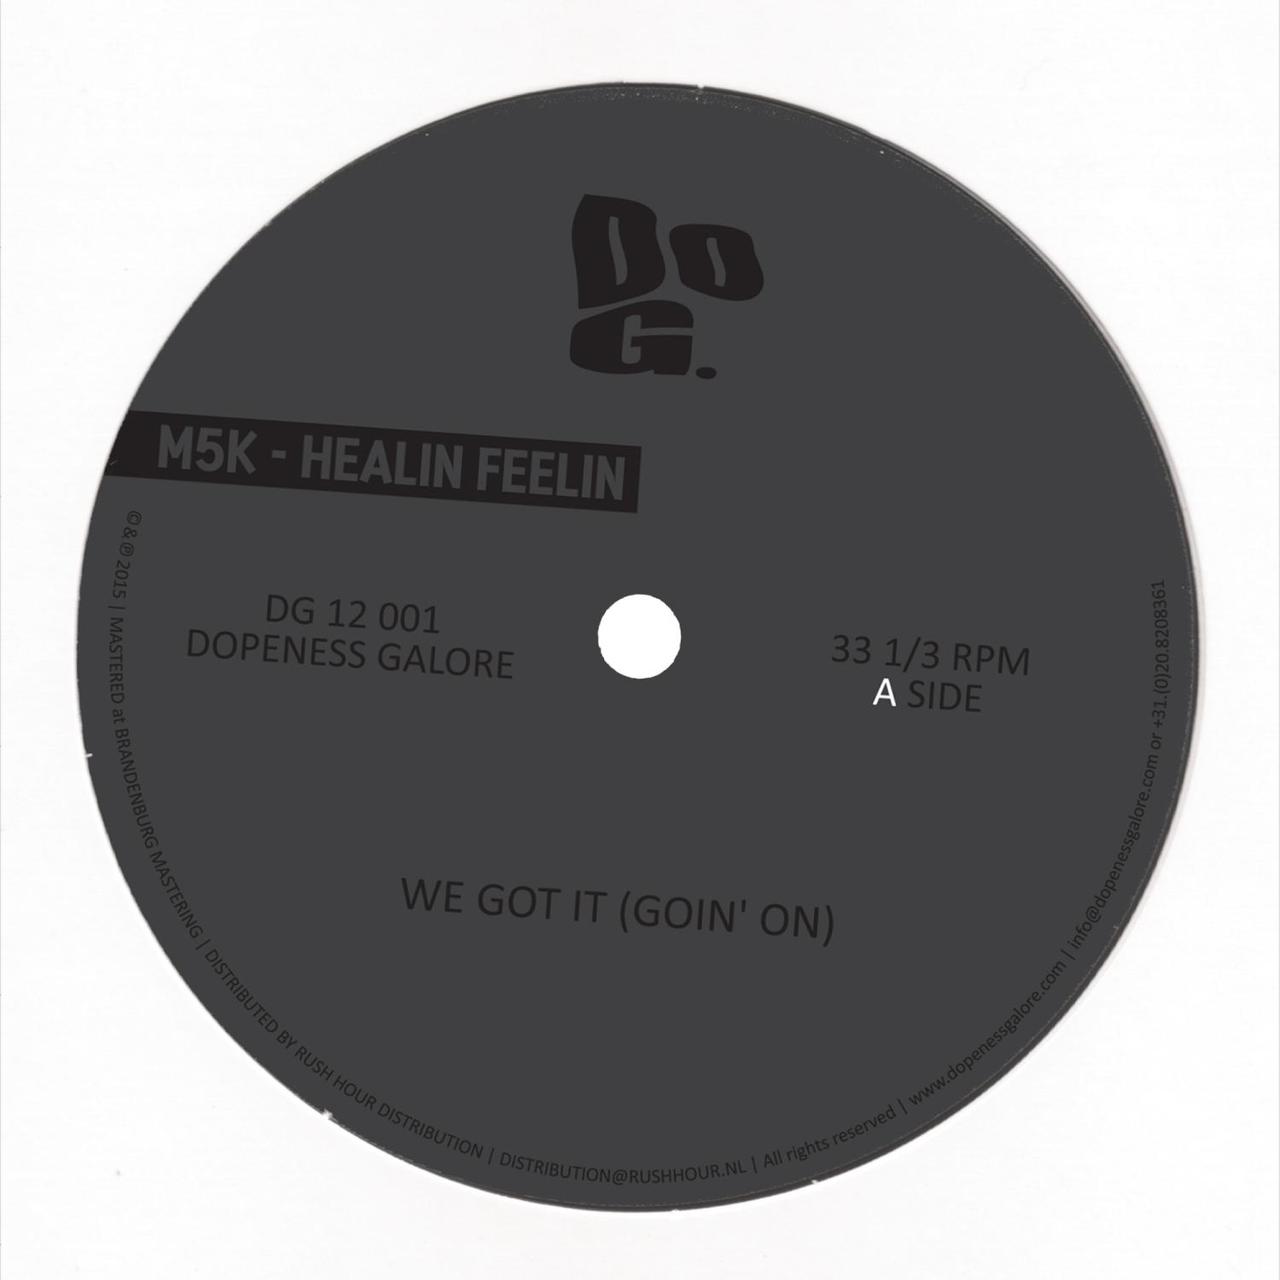 M5K - Healin Feelin (DG 12 001)